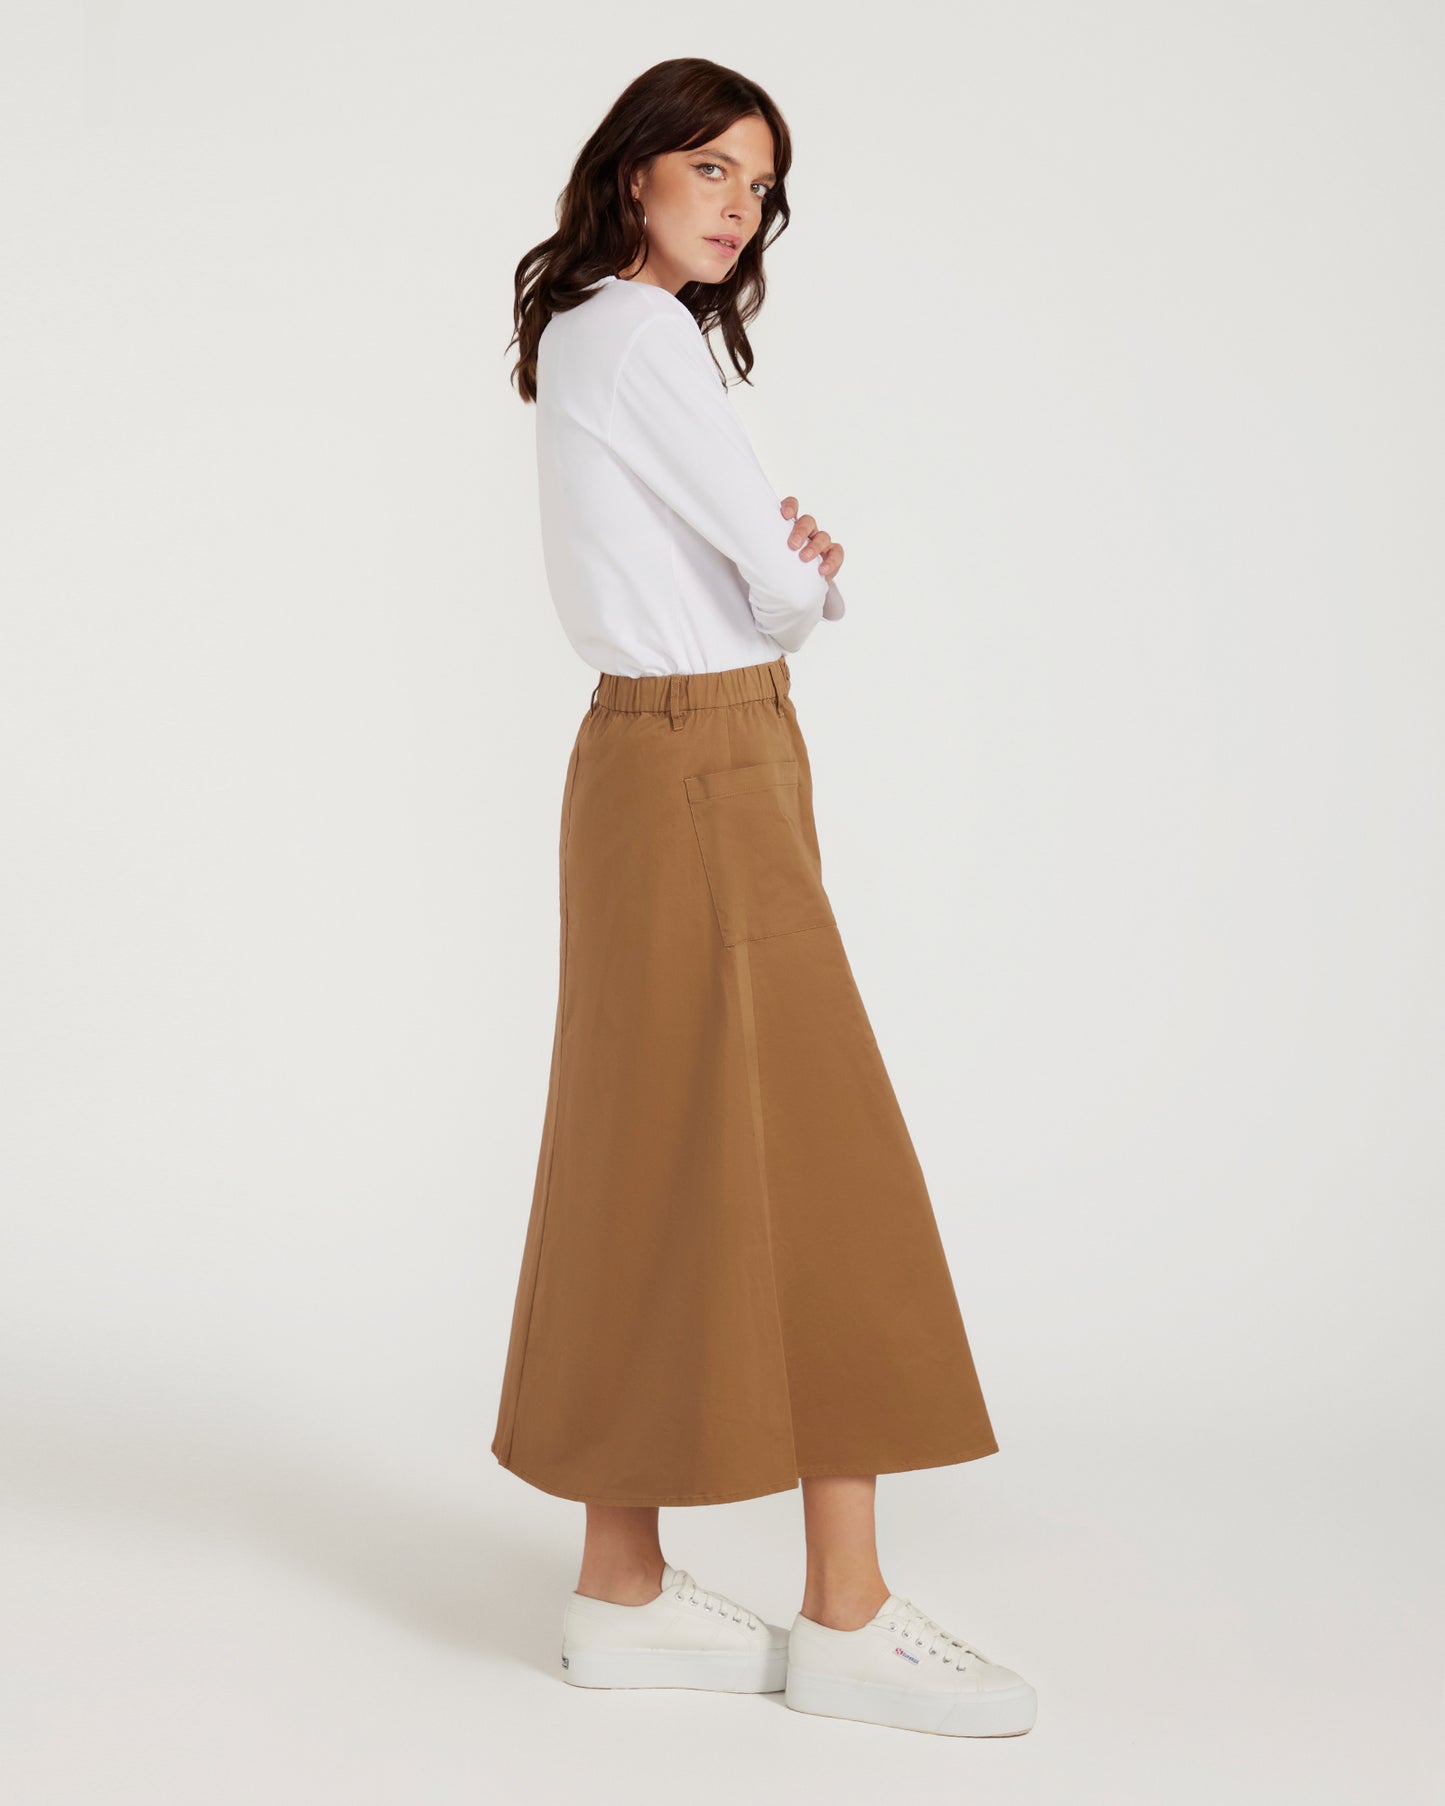 Brown Classic Skirt